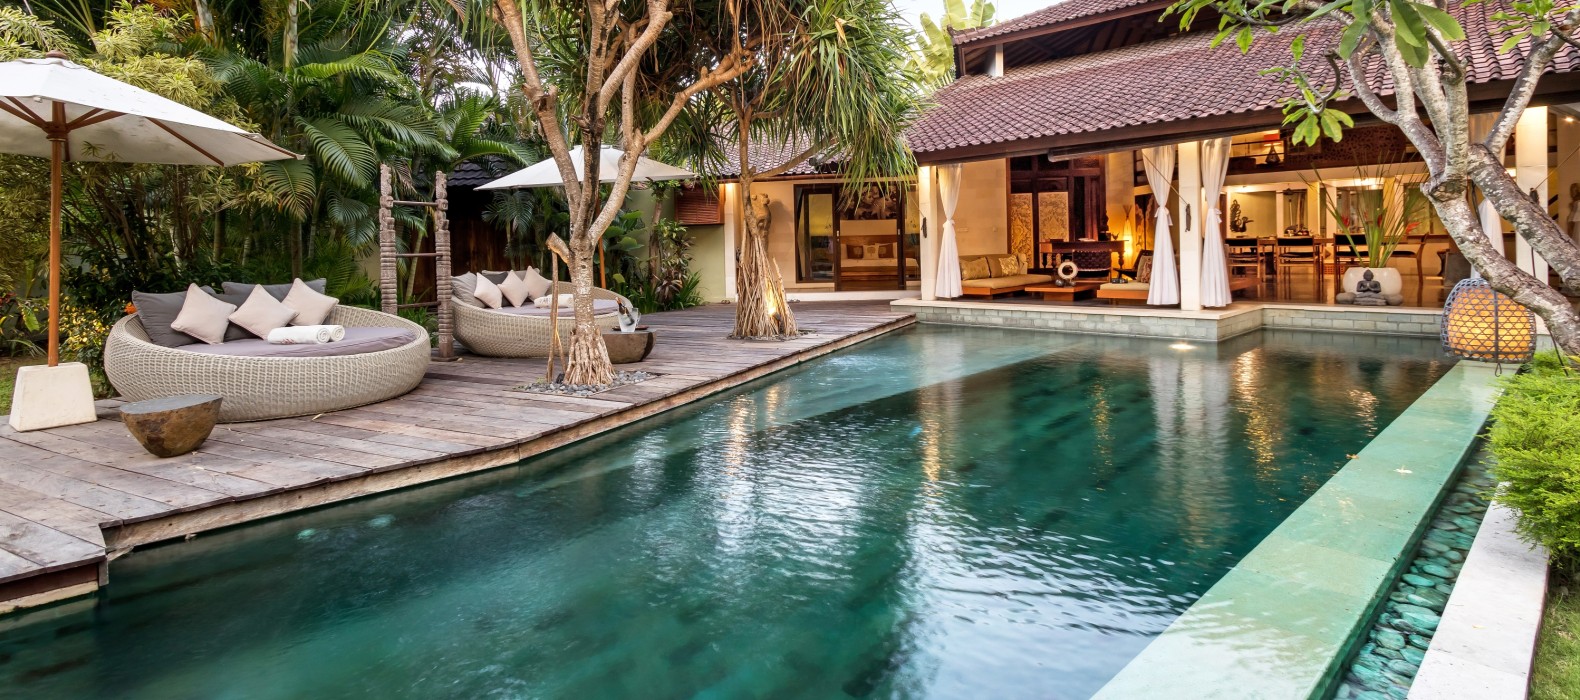 Exterior pool of Villa Shantika in Bali